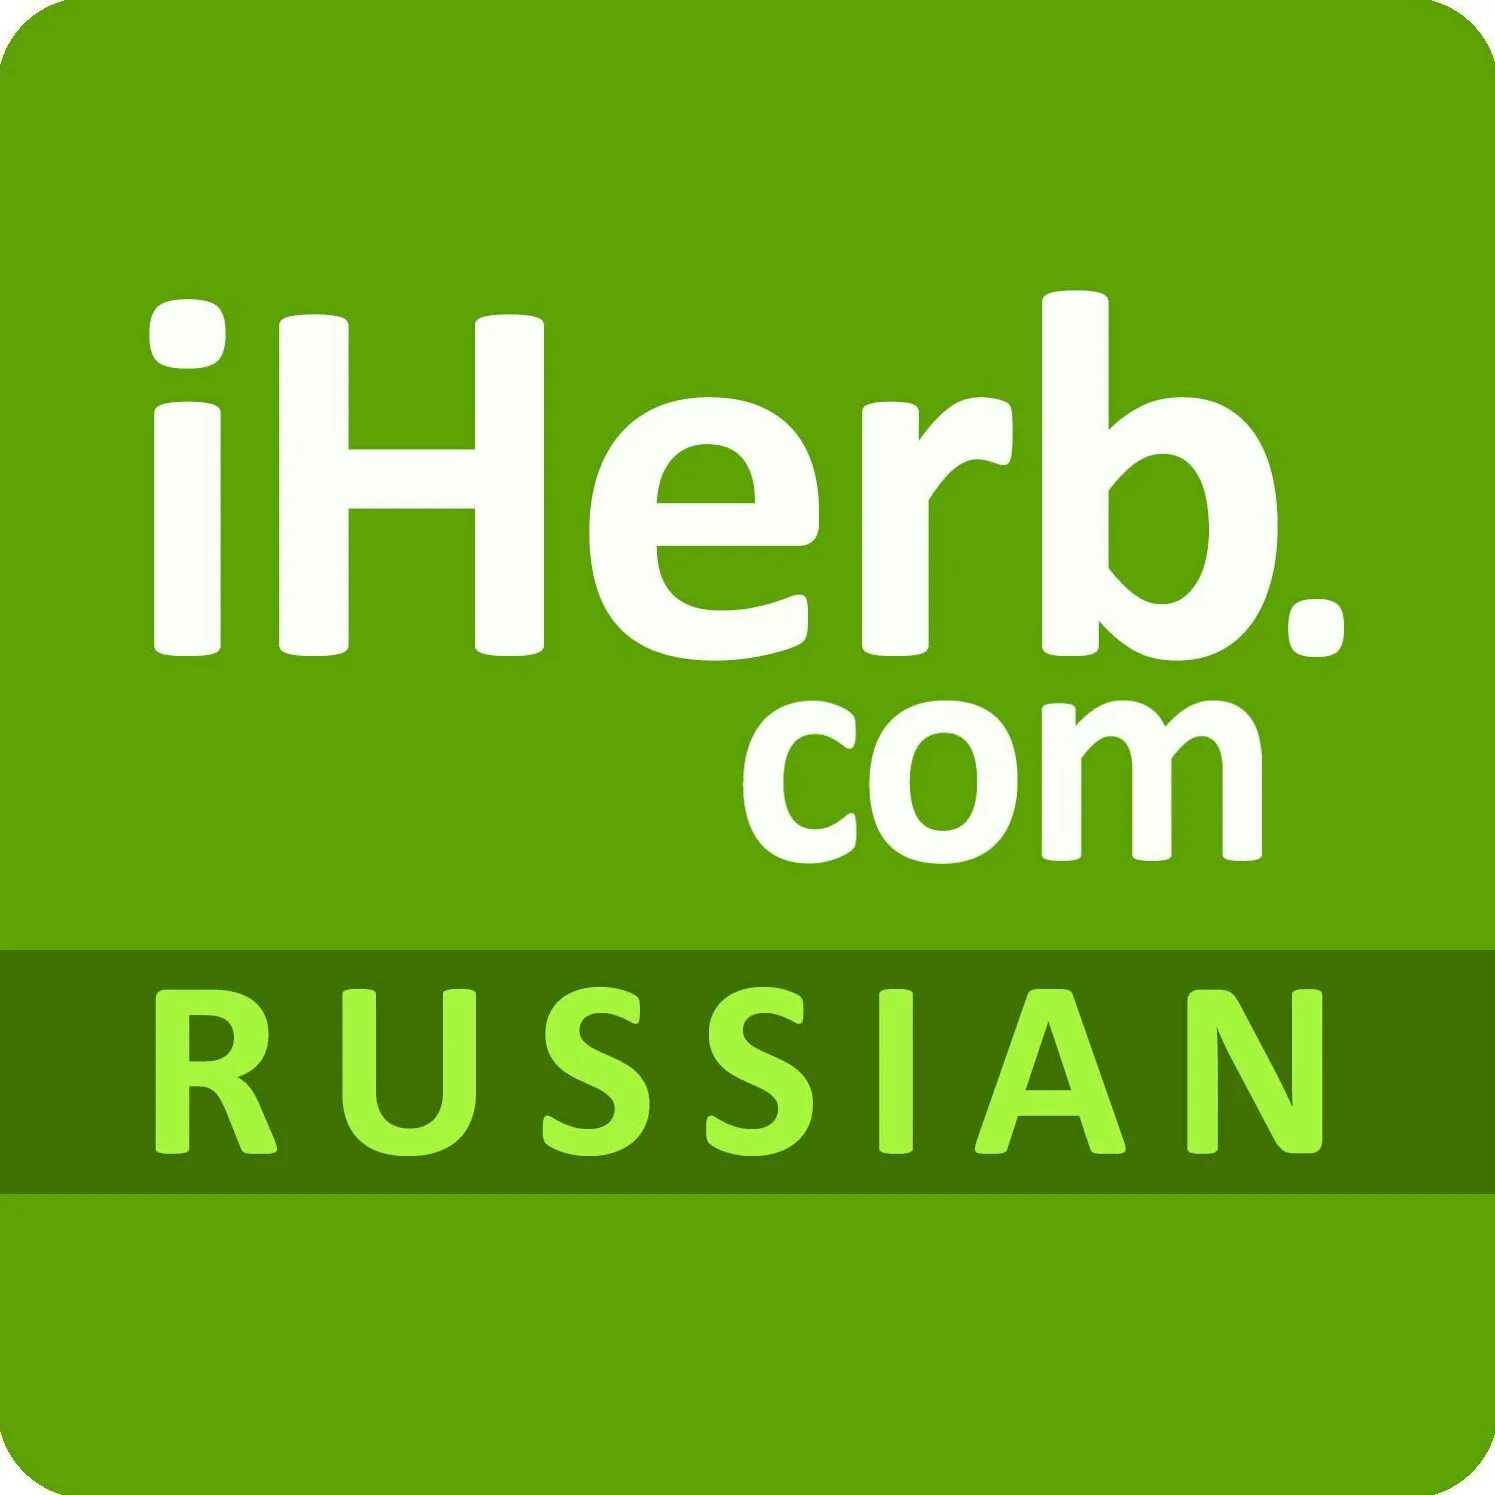 Https ru iherb com. IHERB. IHERB картинки. IHERB логотип картинки. Аватарка для страницы IHERB.